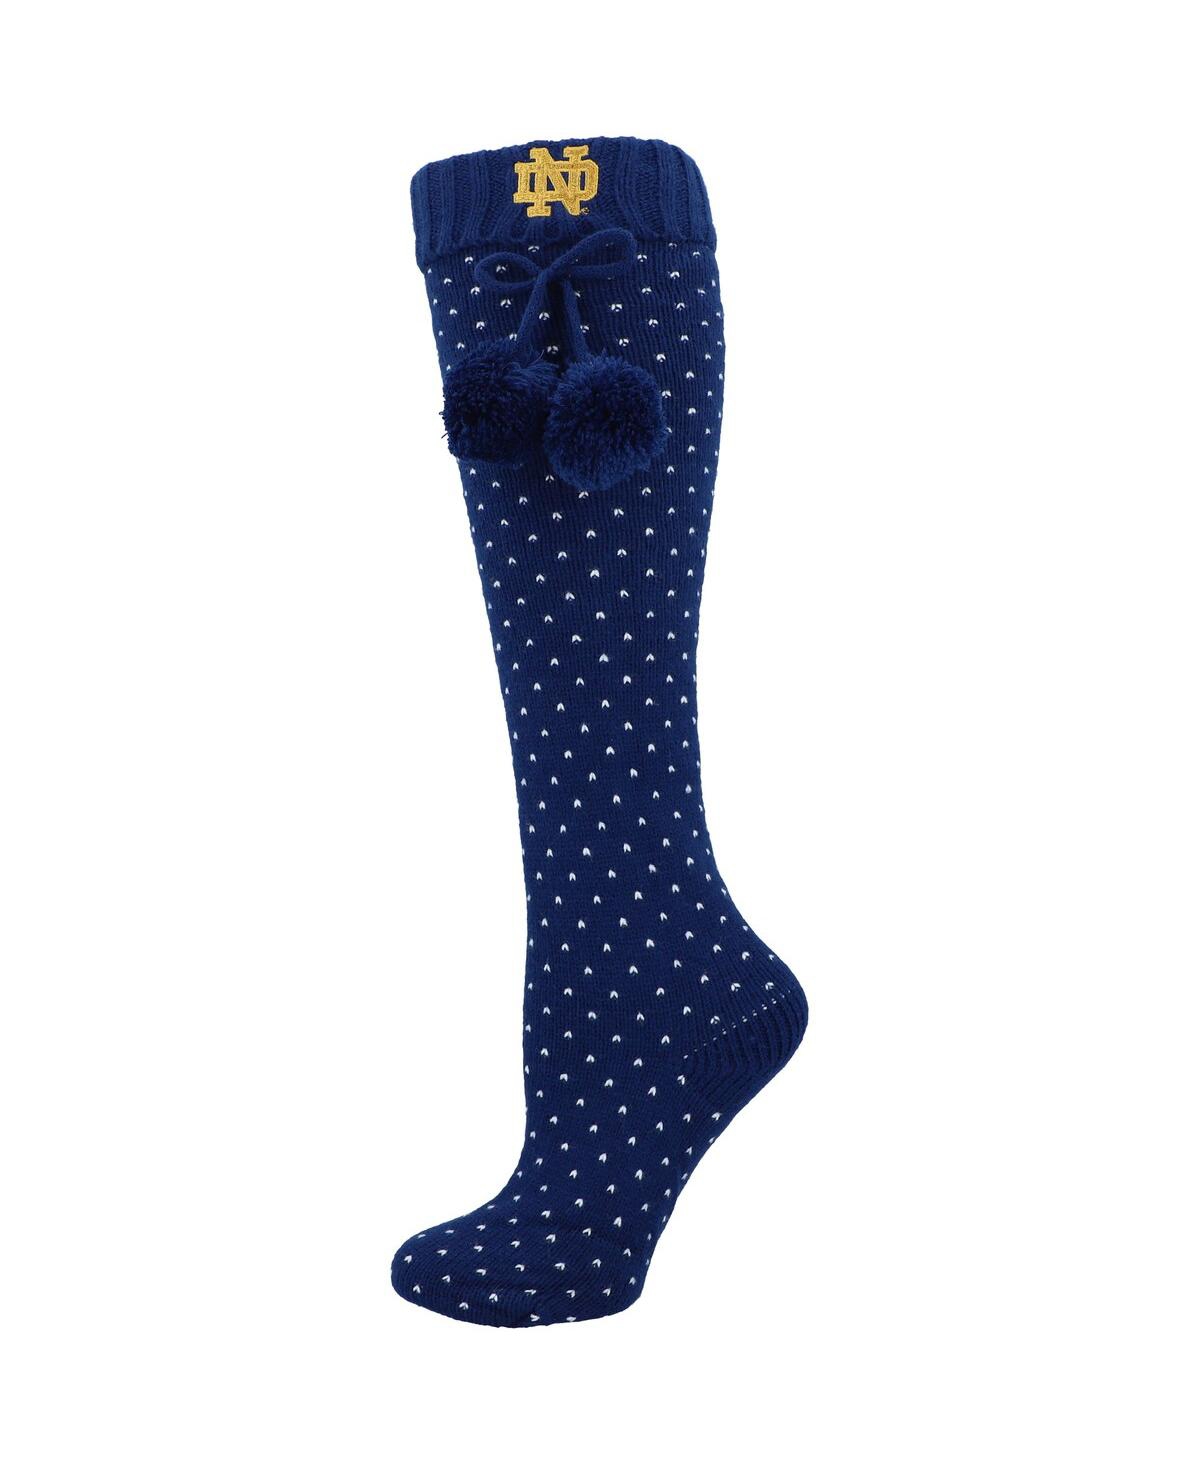 Shop Zoozatz Women's  Navy Notre Dame Fighting Irish Knee High Socks